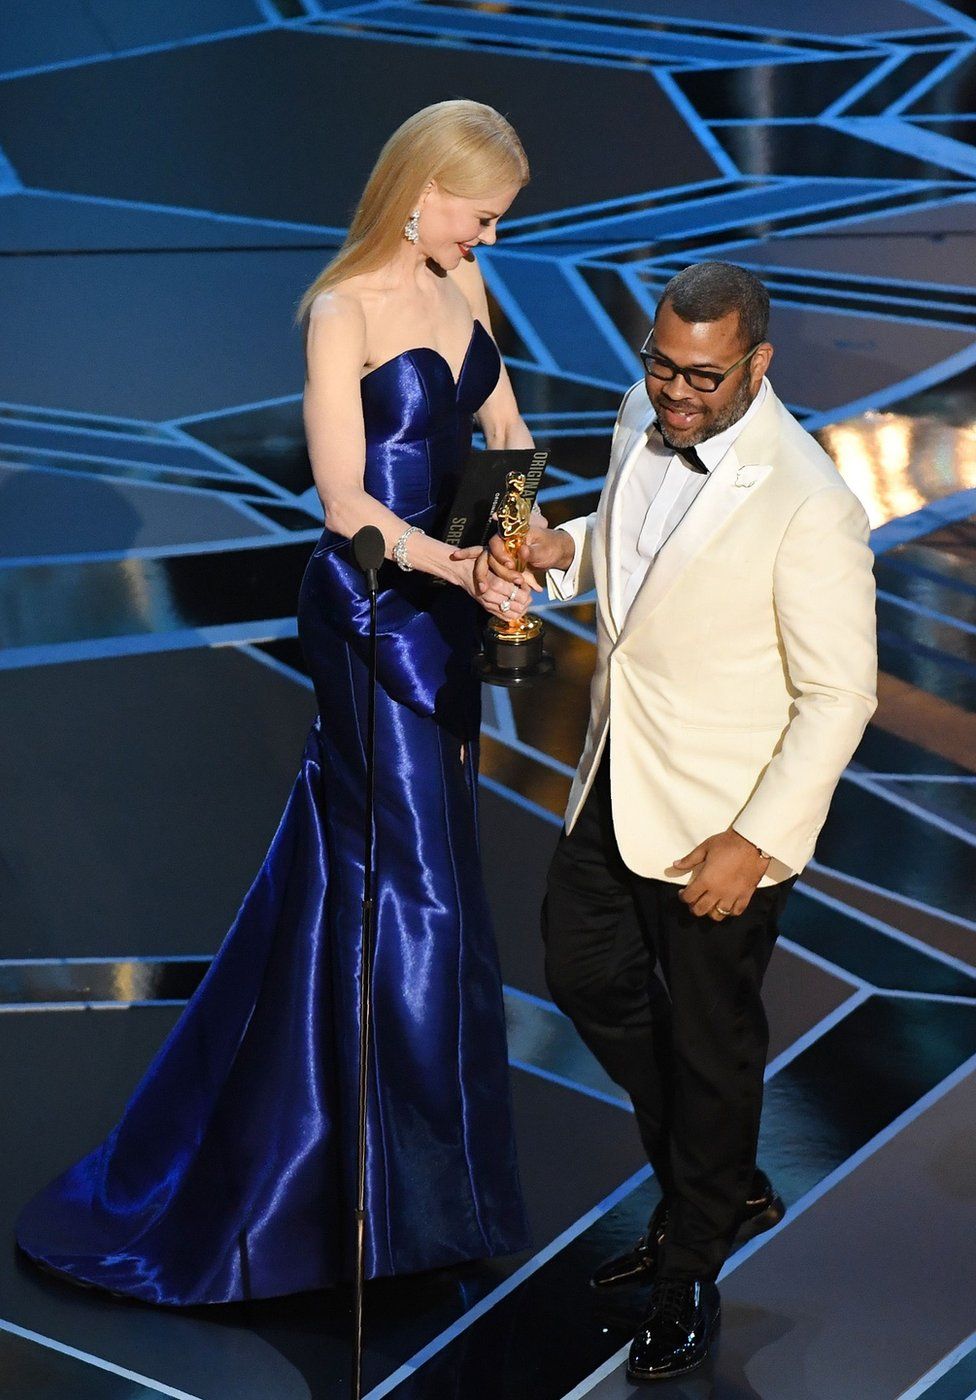 Nicole Kidman presents an Oscar to Jordan Peele